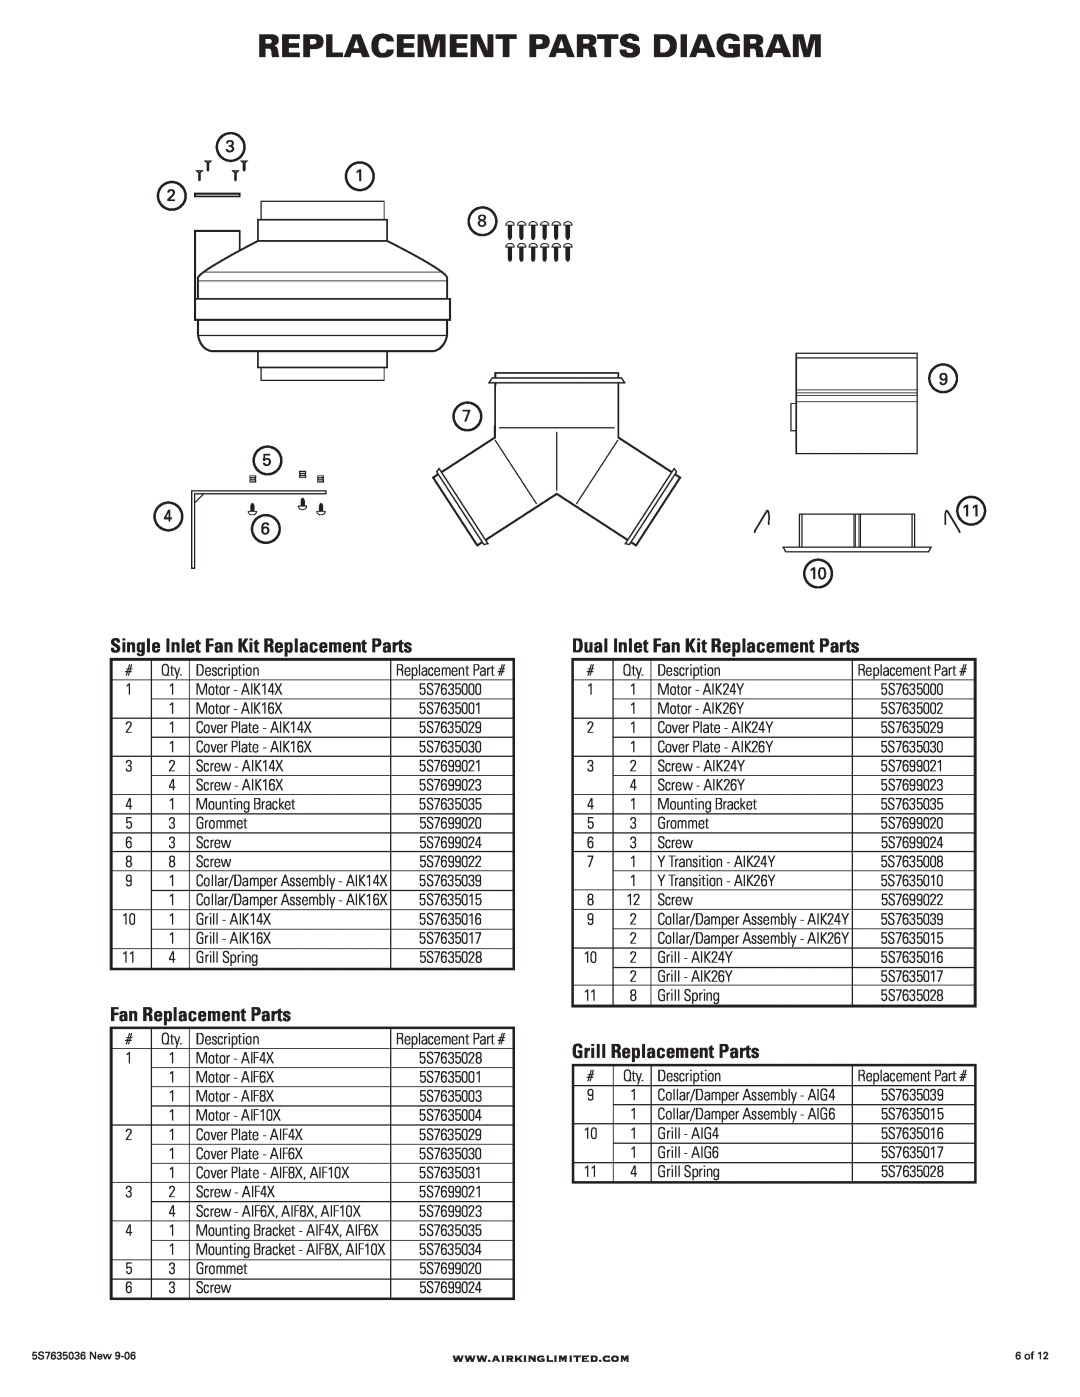 Air King AIF10X, AIK26Y, AIK16X Replacement Parts Diagram, Single Inlet Fan Kit Replacement Parts, Fan Replacement Parts 